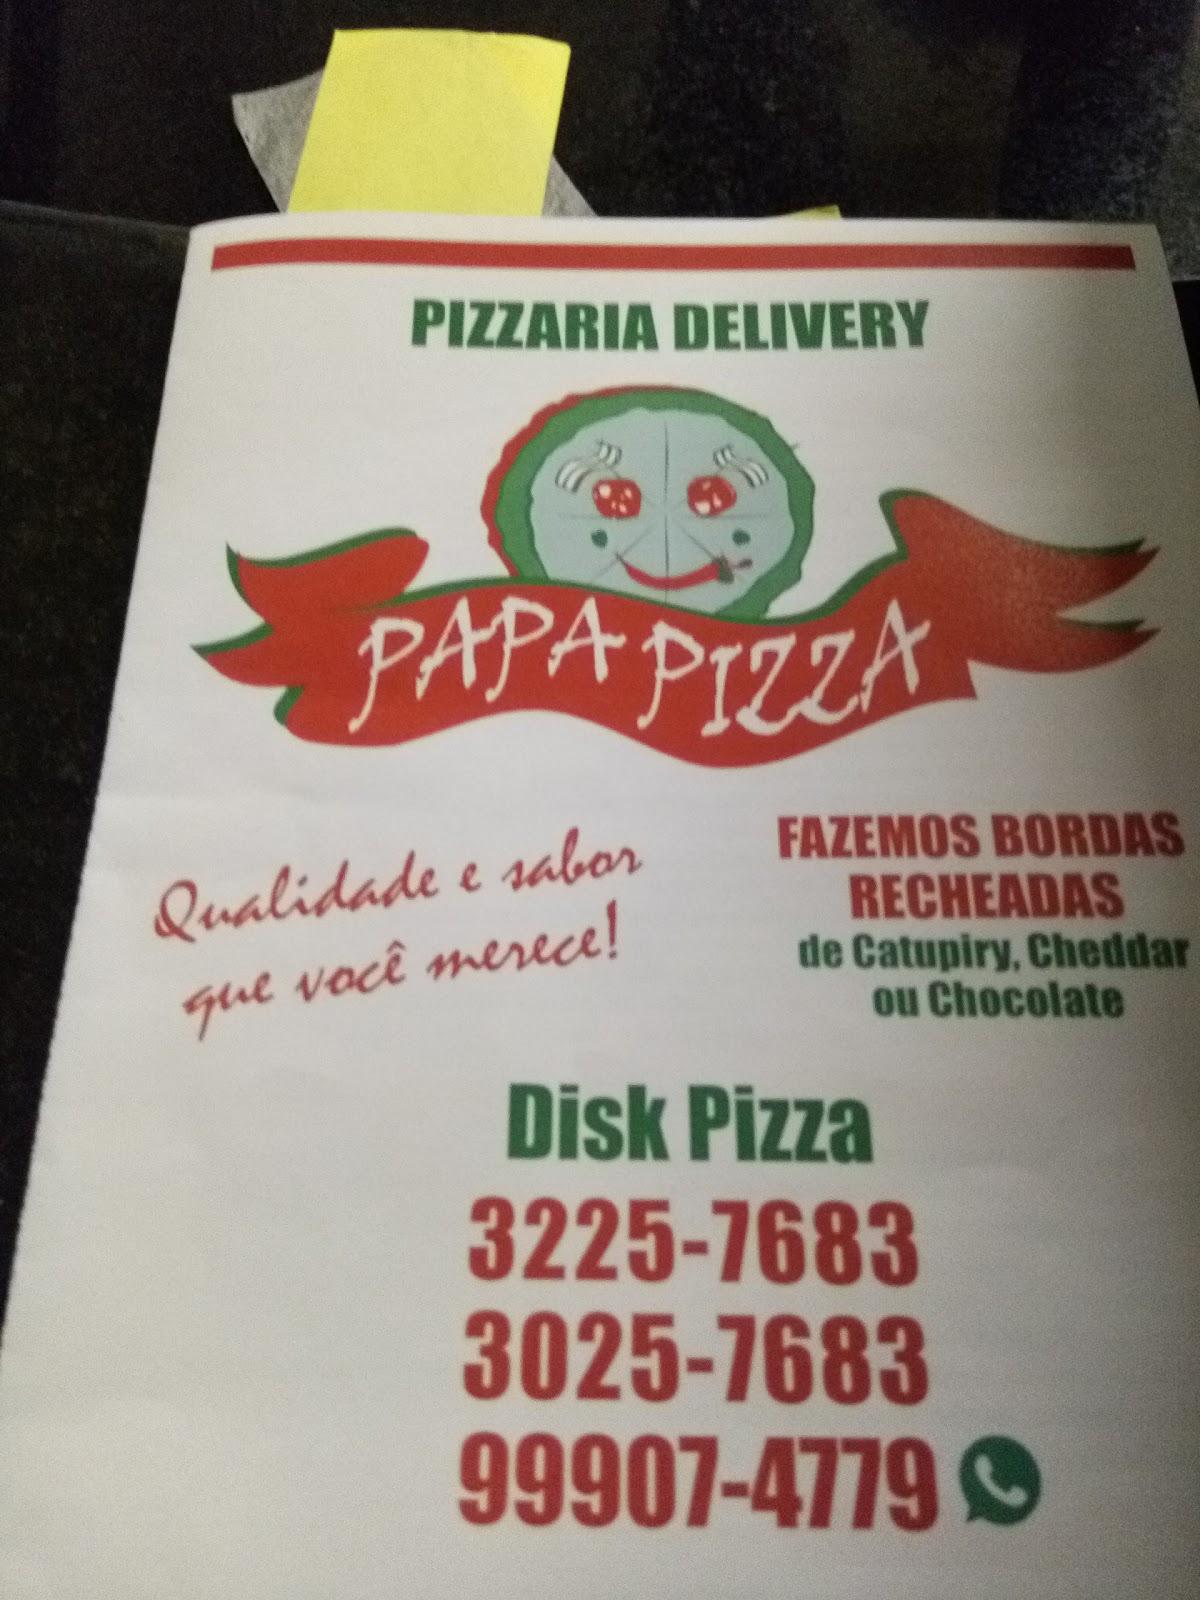 Papa Pizza pizzeria, Pato Branco - Restaurant reviews